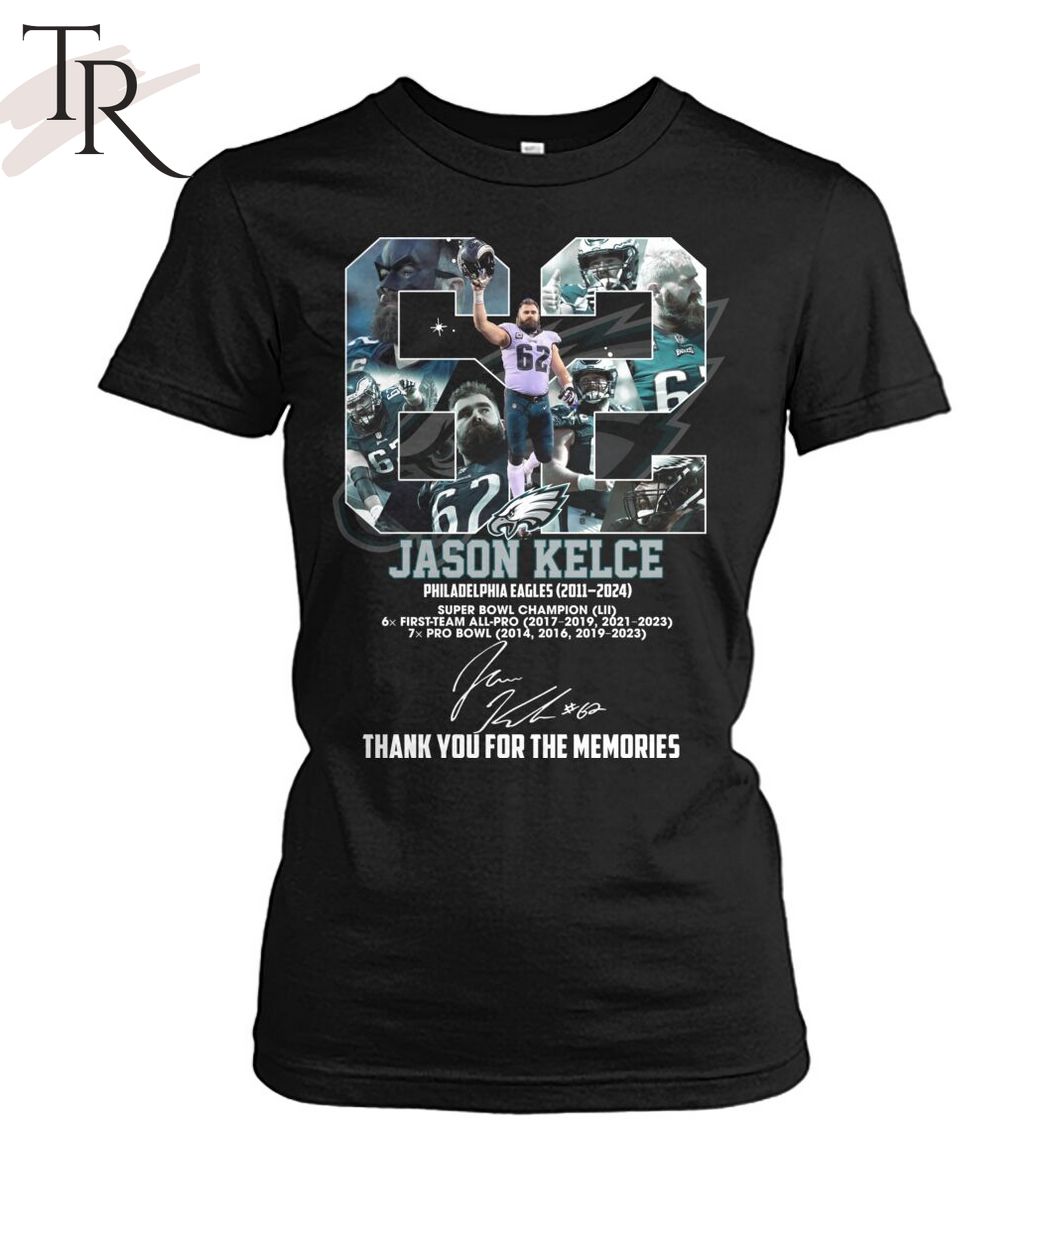 Philadelphia Eagles 2011 - 2024 Jason Kelce Thank You For The Memories T-Shirt